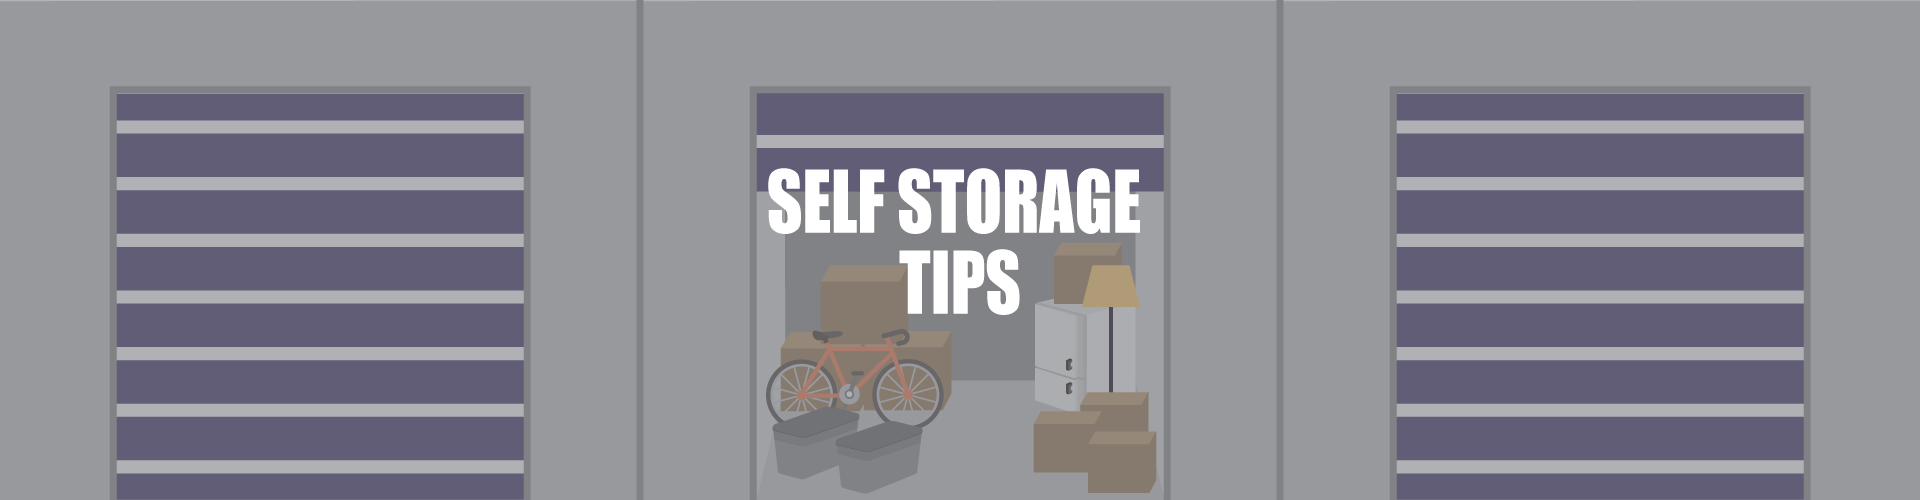 Self Storage Tips graphic